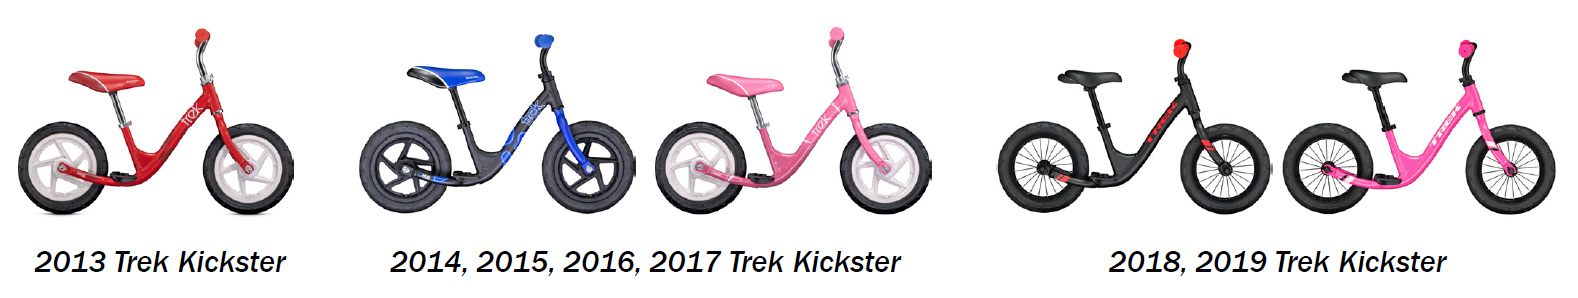 Trek kicks off voluntary recall of 2013 - 2019 Kickster kids' balance bike